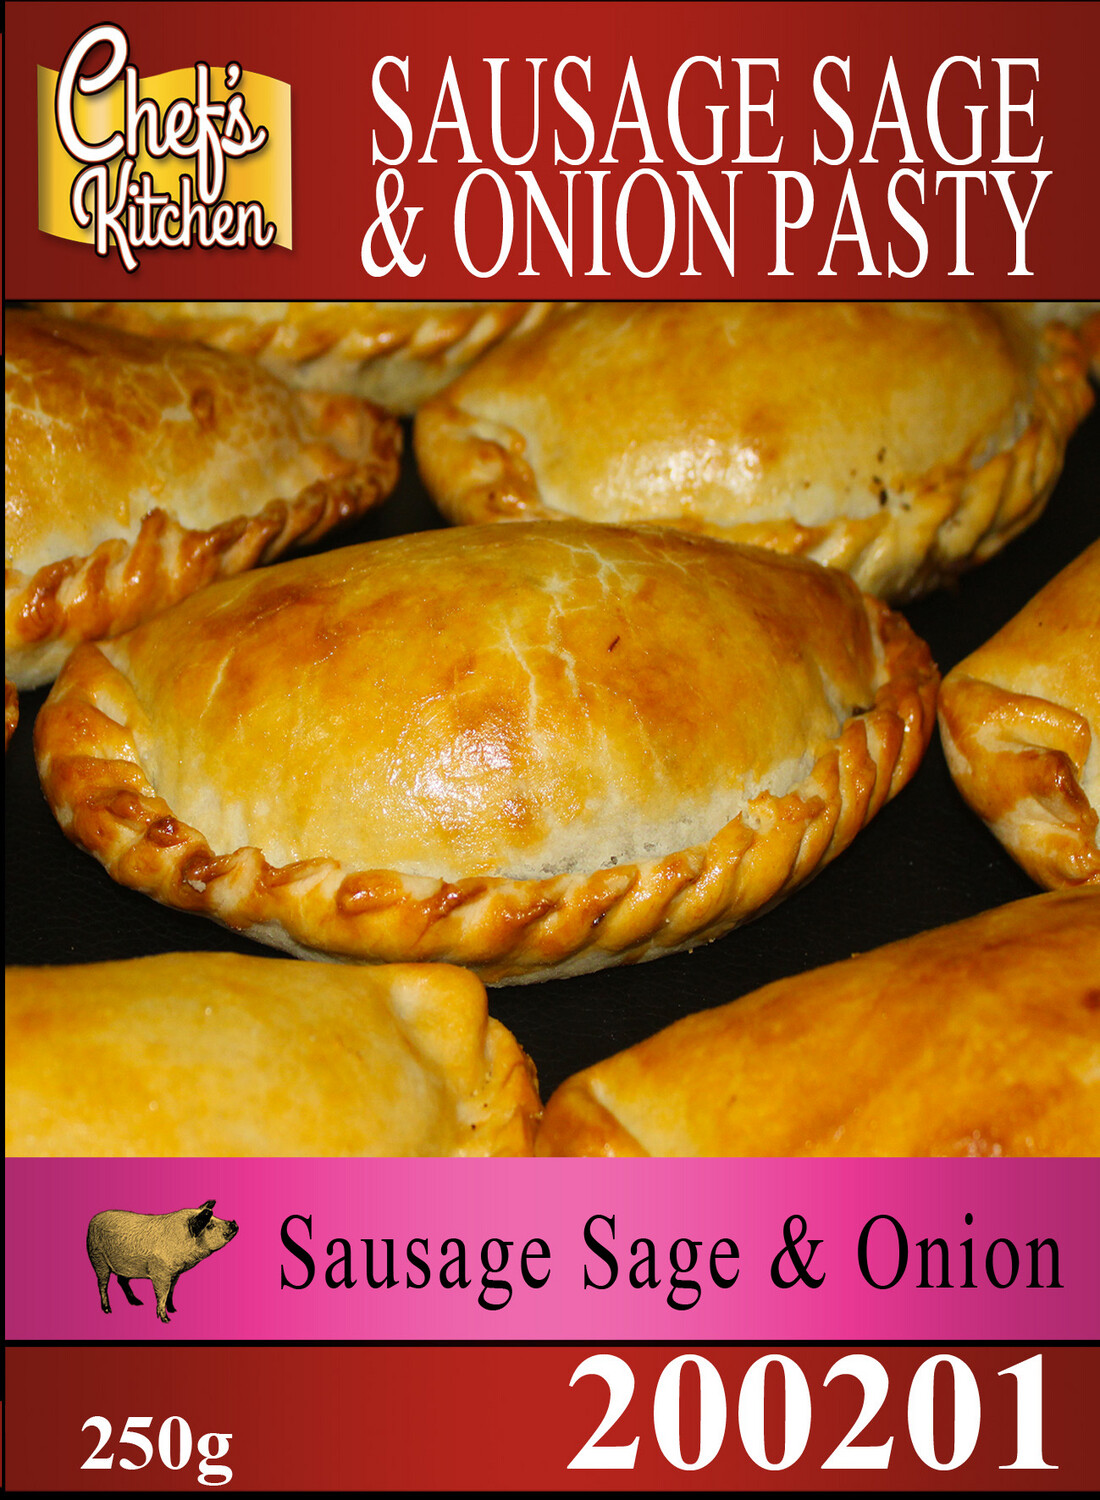 Sausage, Sage and Onion Pasty